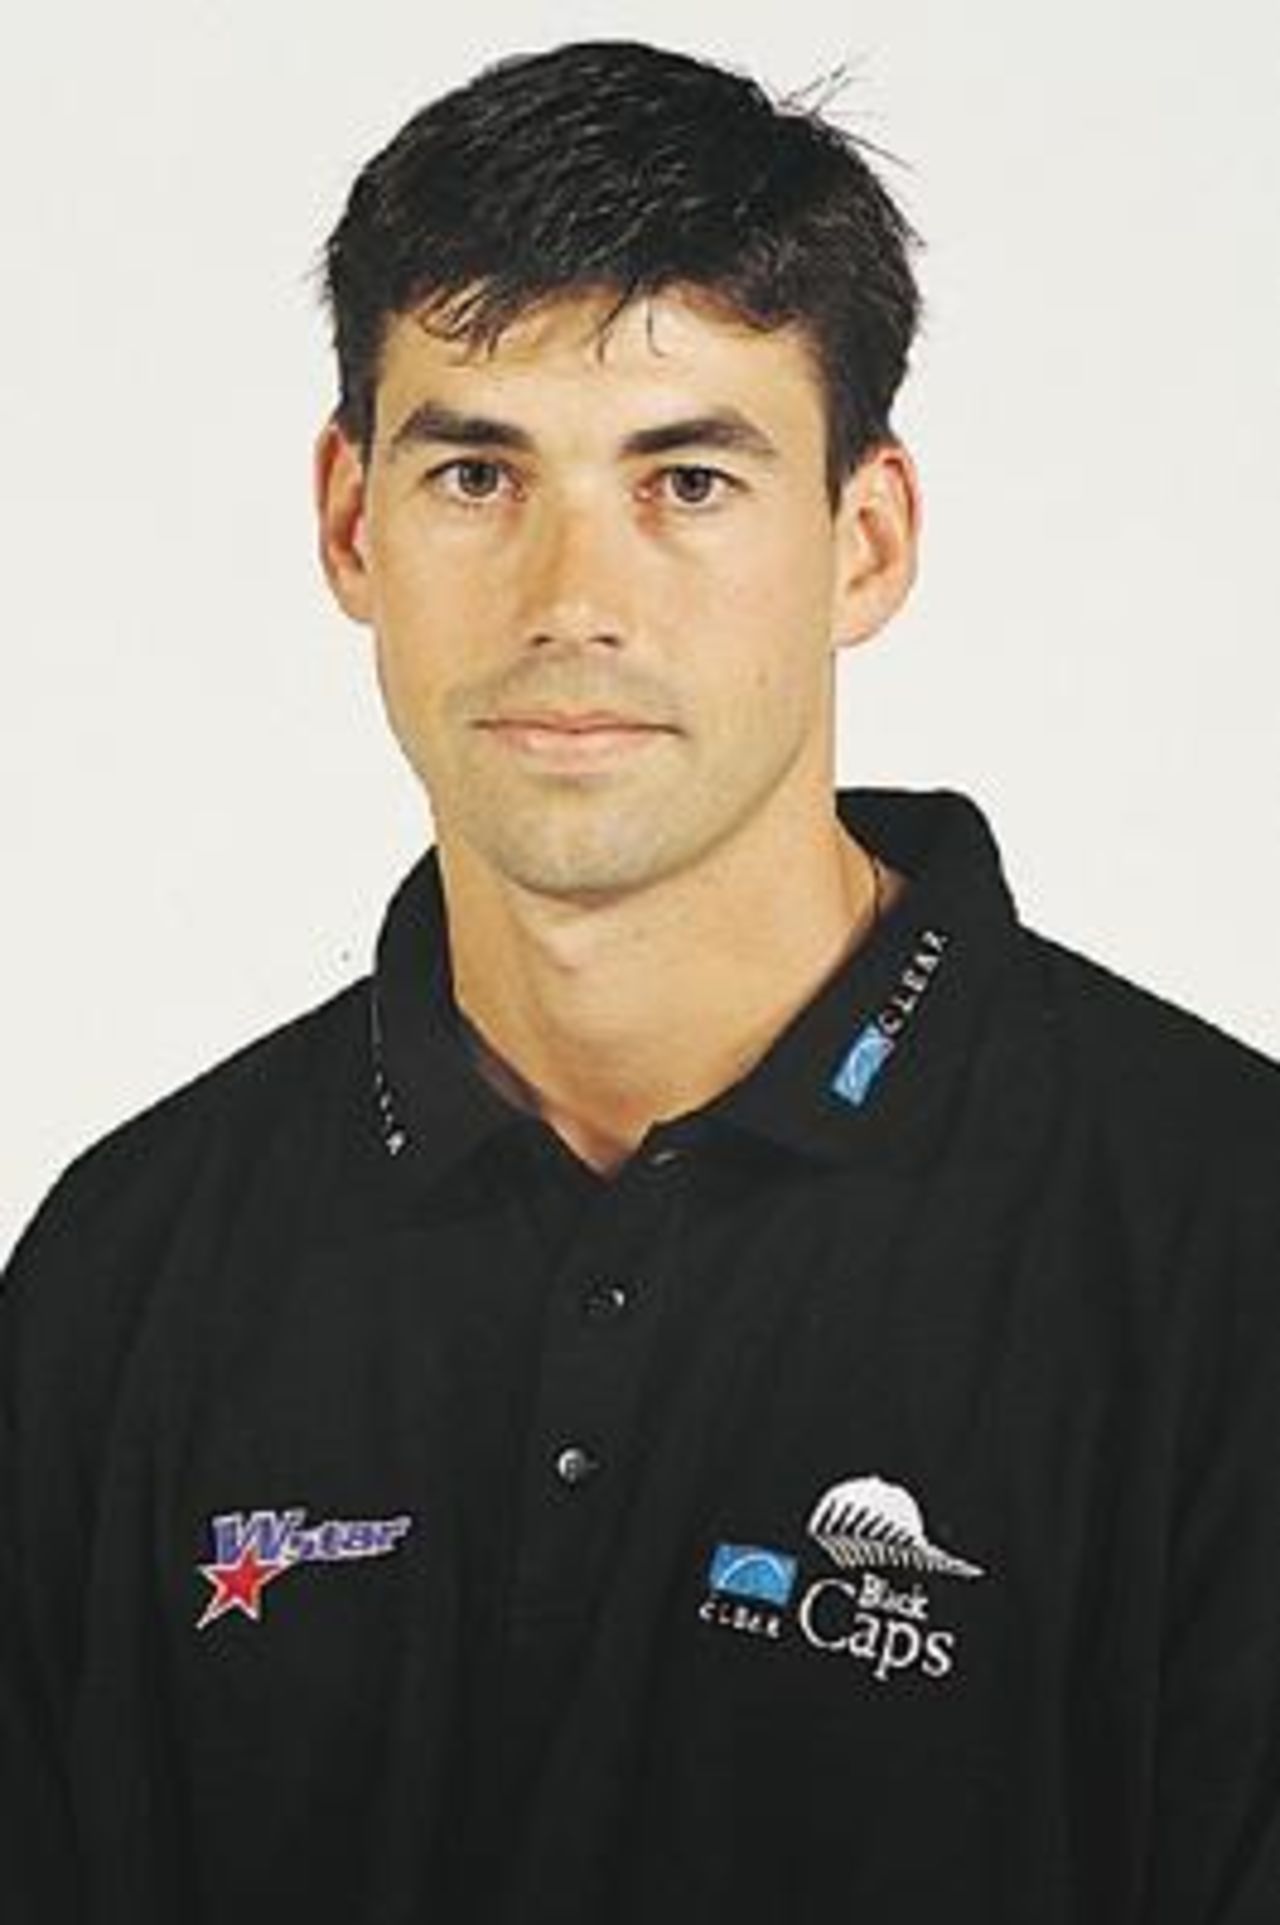 Portrait of Stephen Fleming - New Zealand captain in the 2000/01 season